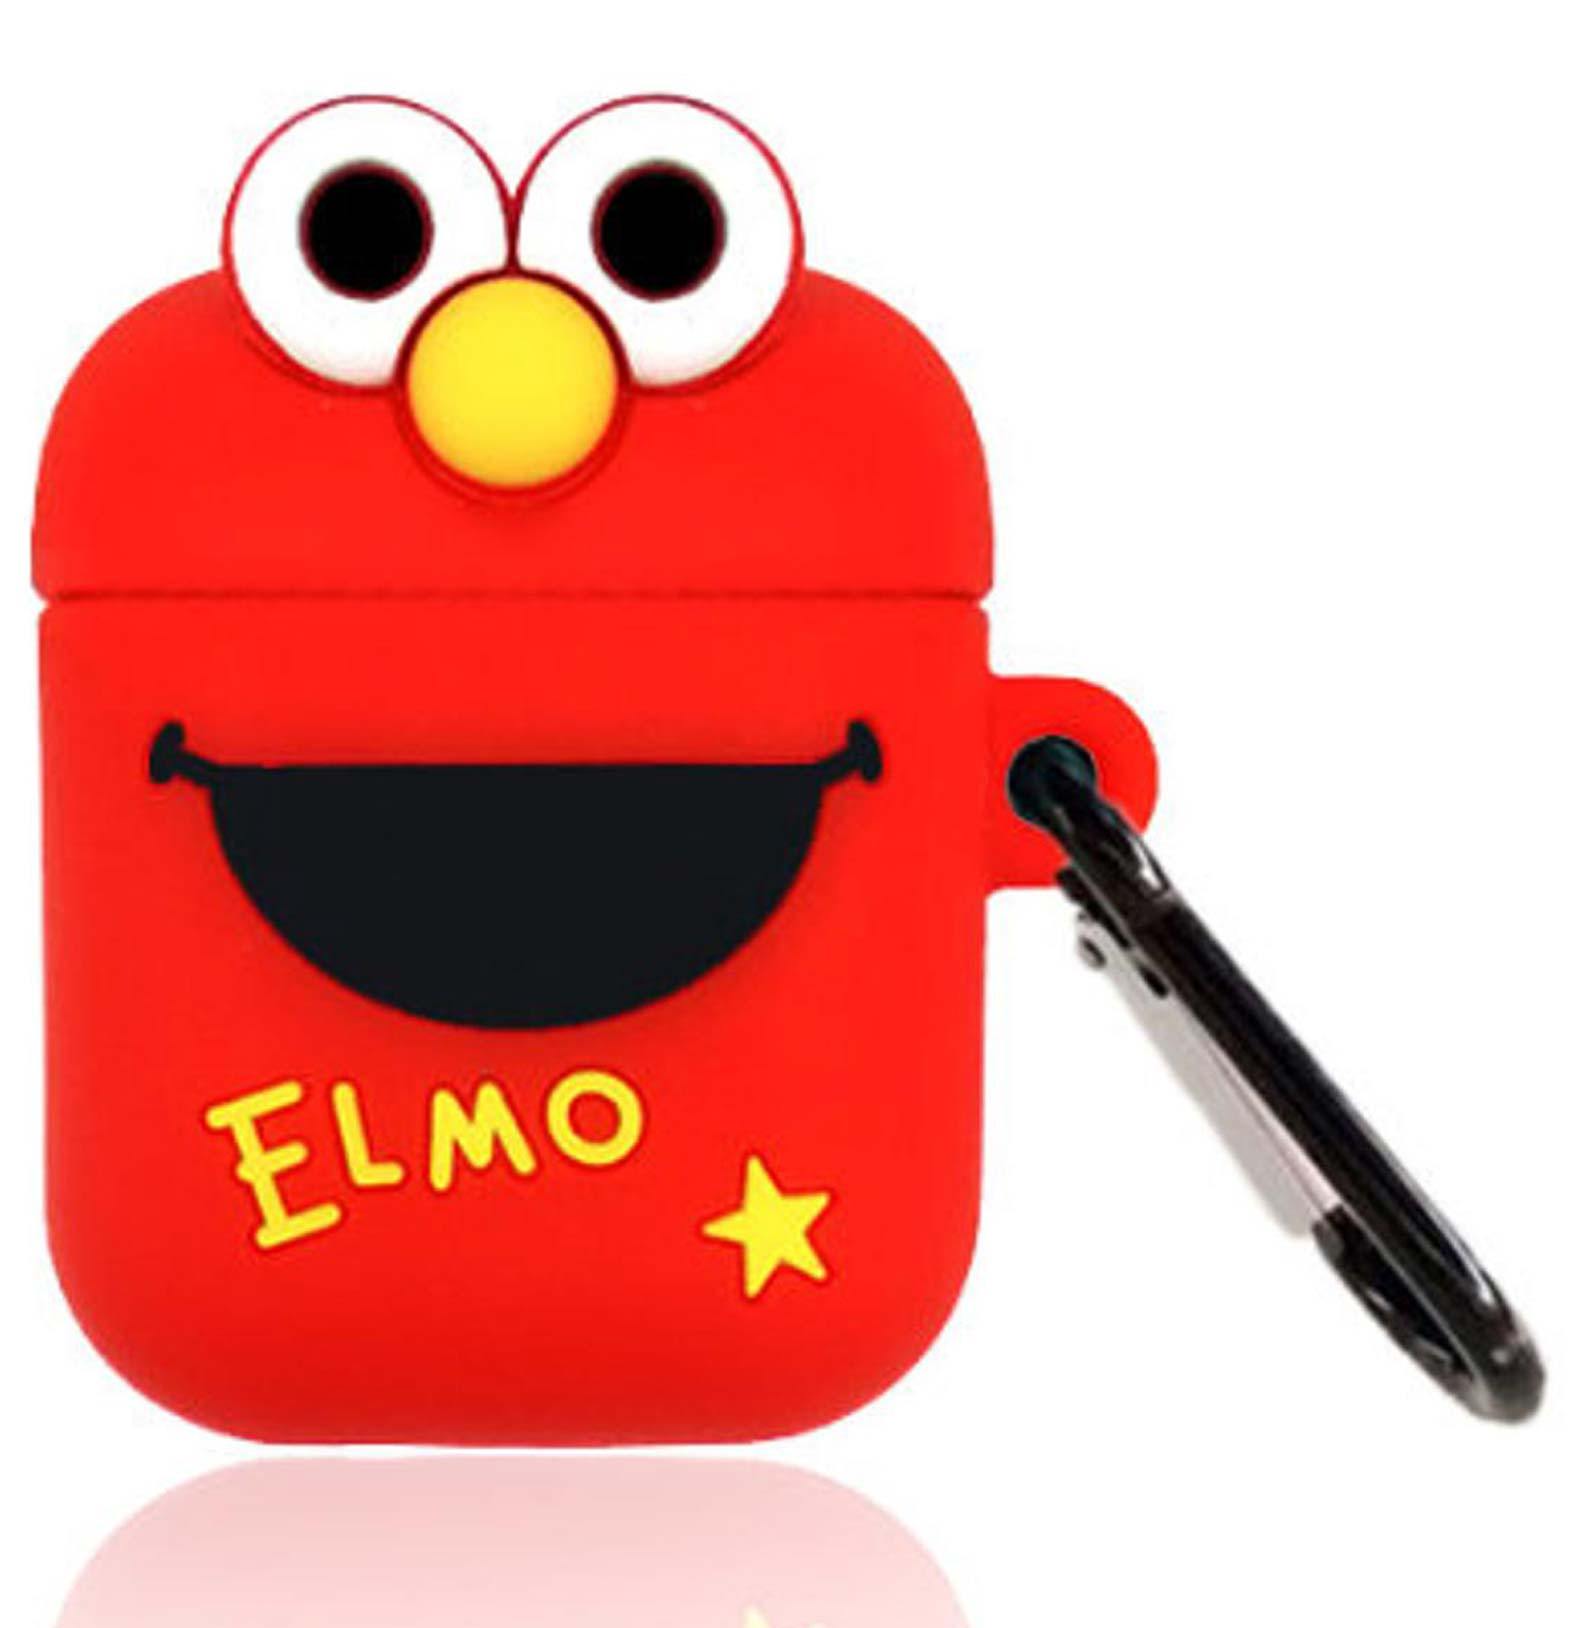 Elmo Apple Airpods Case - MiLottie